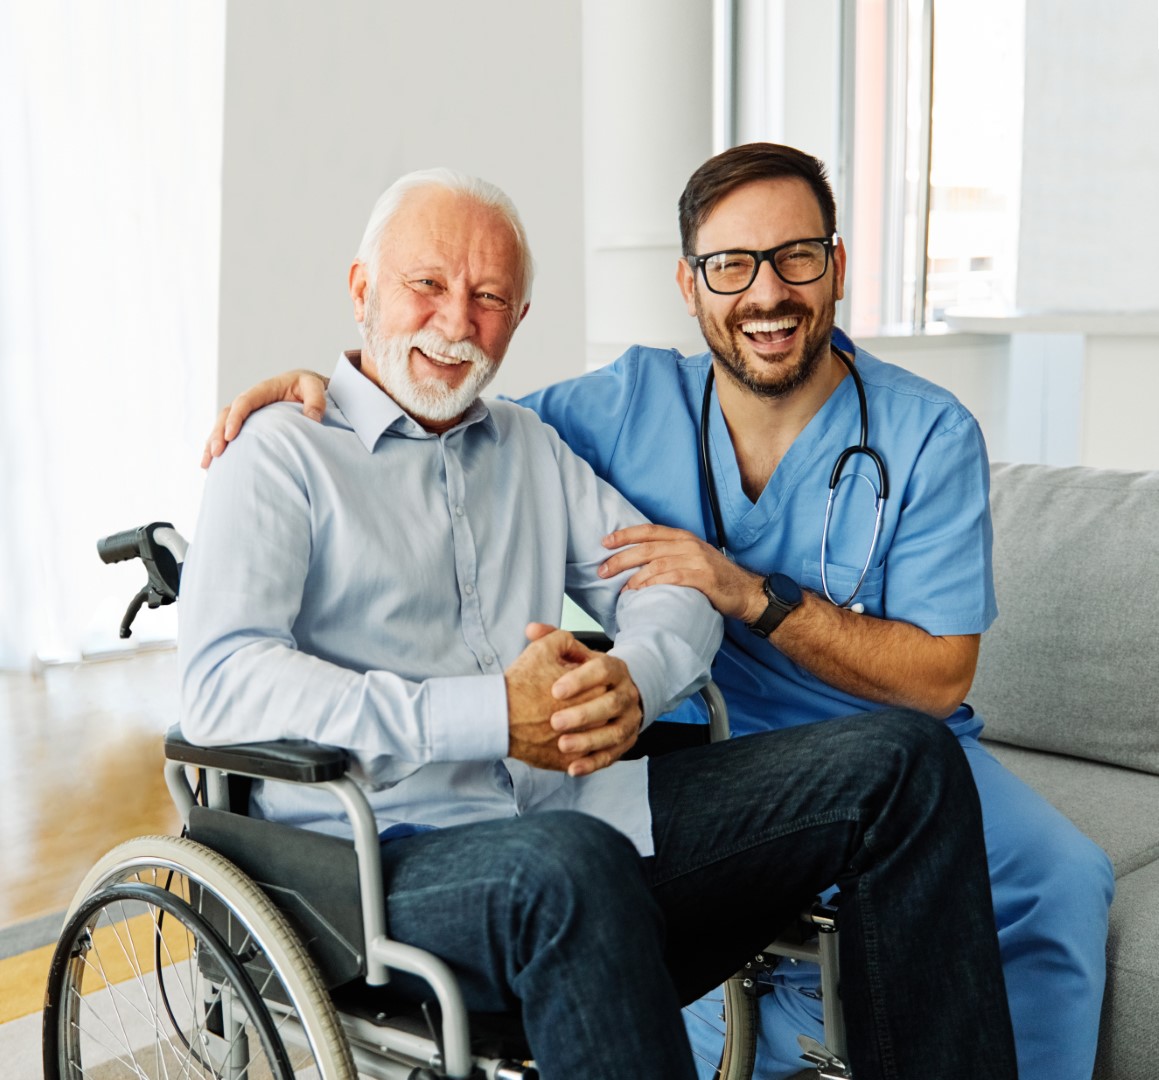 Doctor or nurse caregiver helping  senior man in a wheelchair at home or nursing home